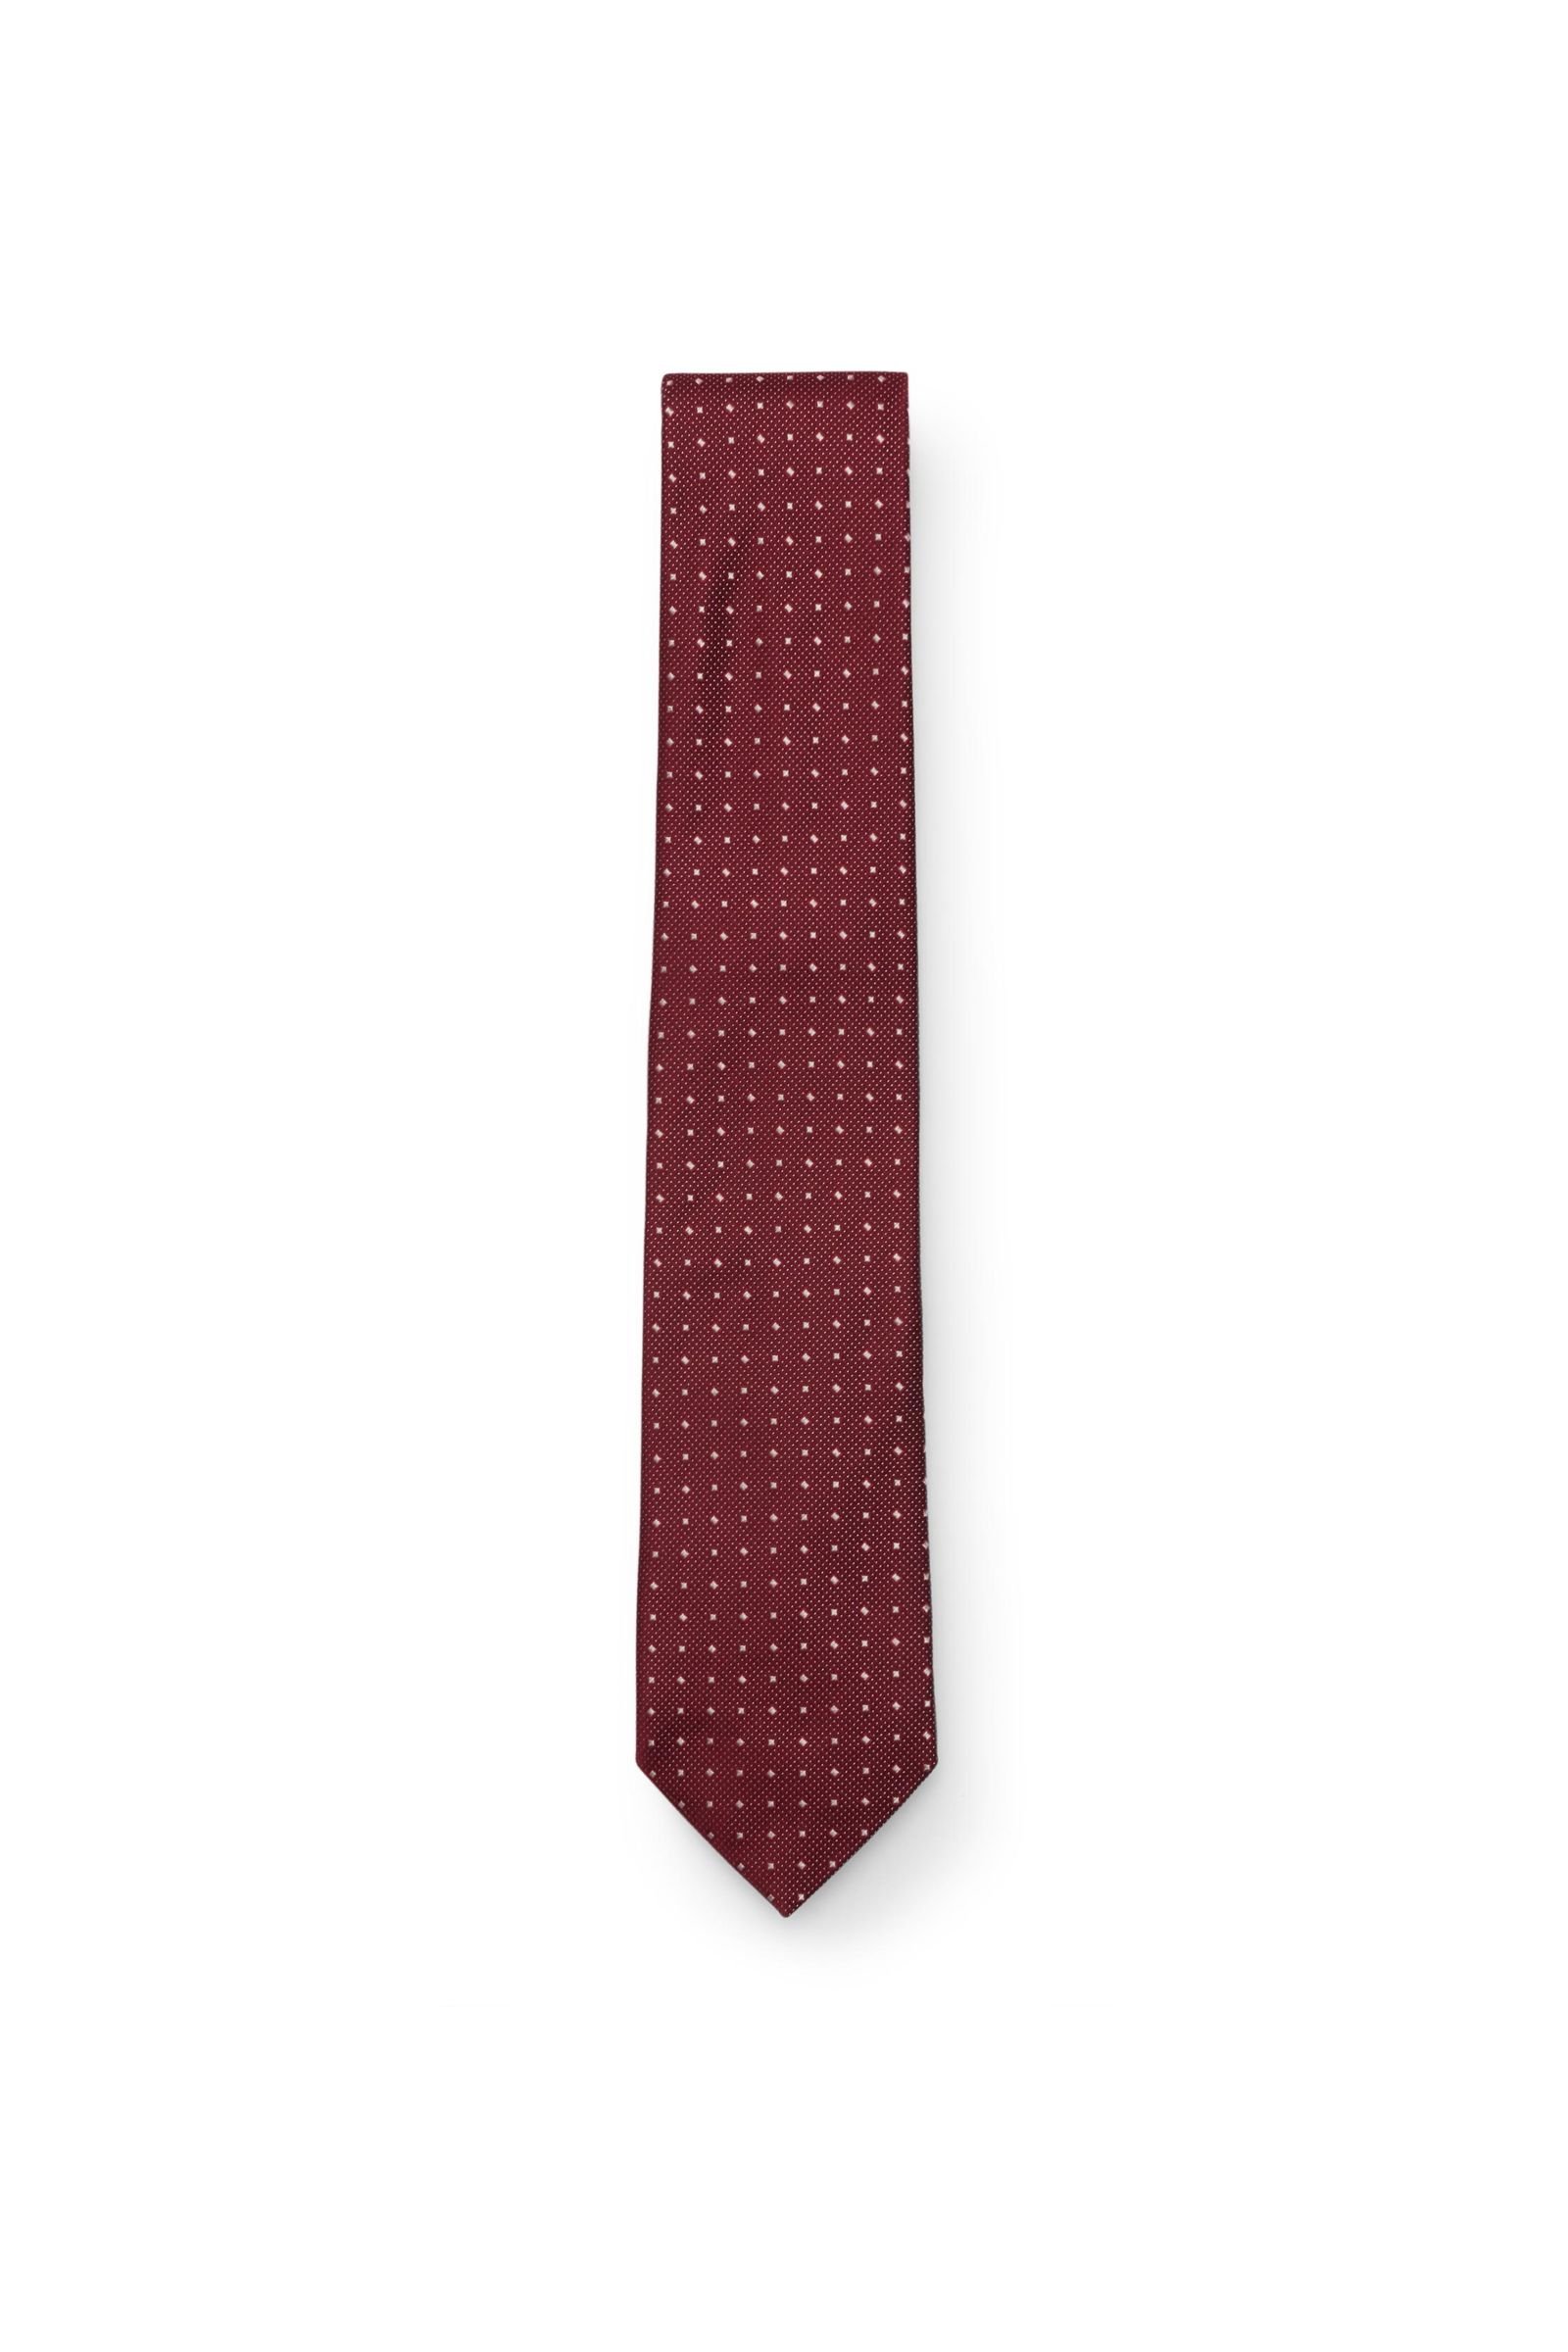 Silk tie dark red patterned